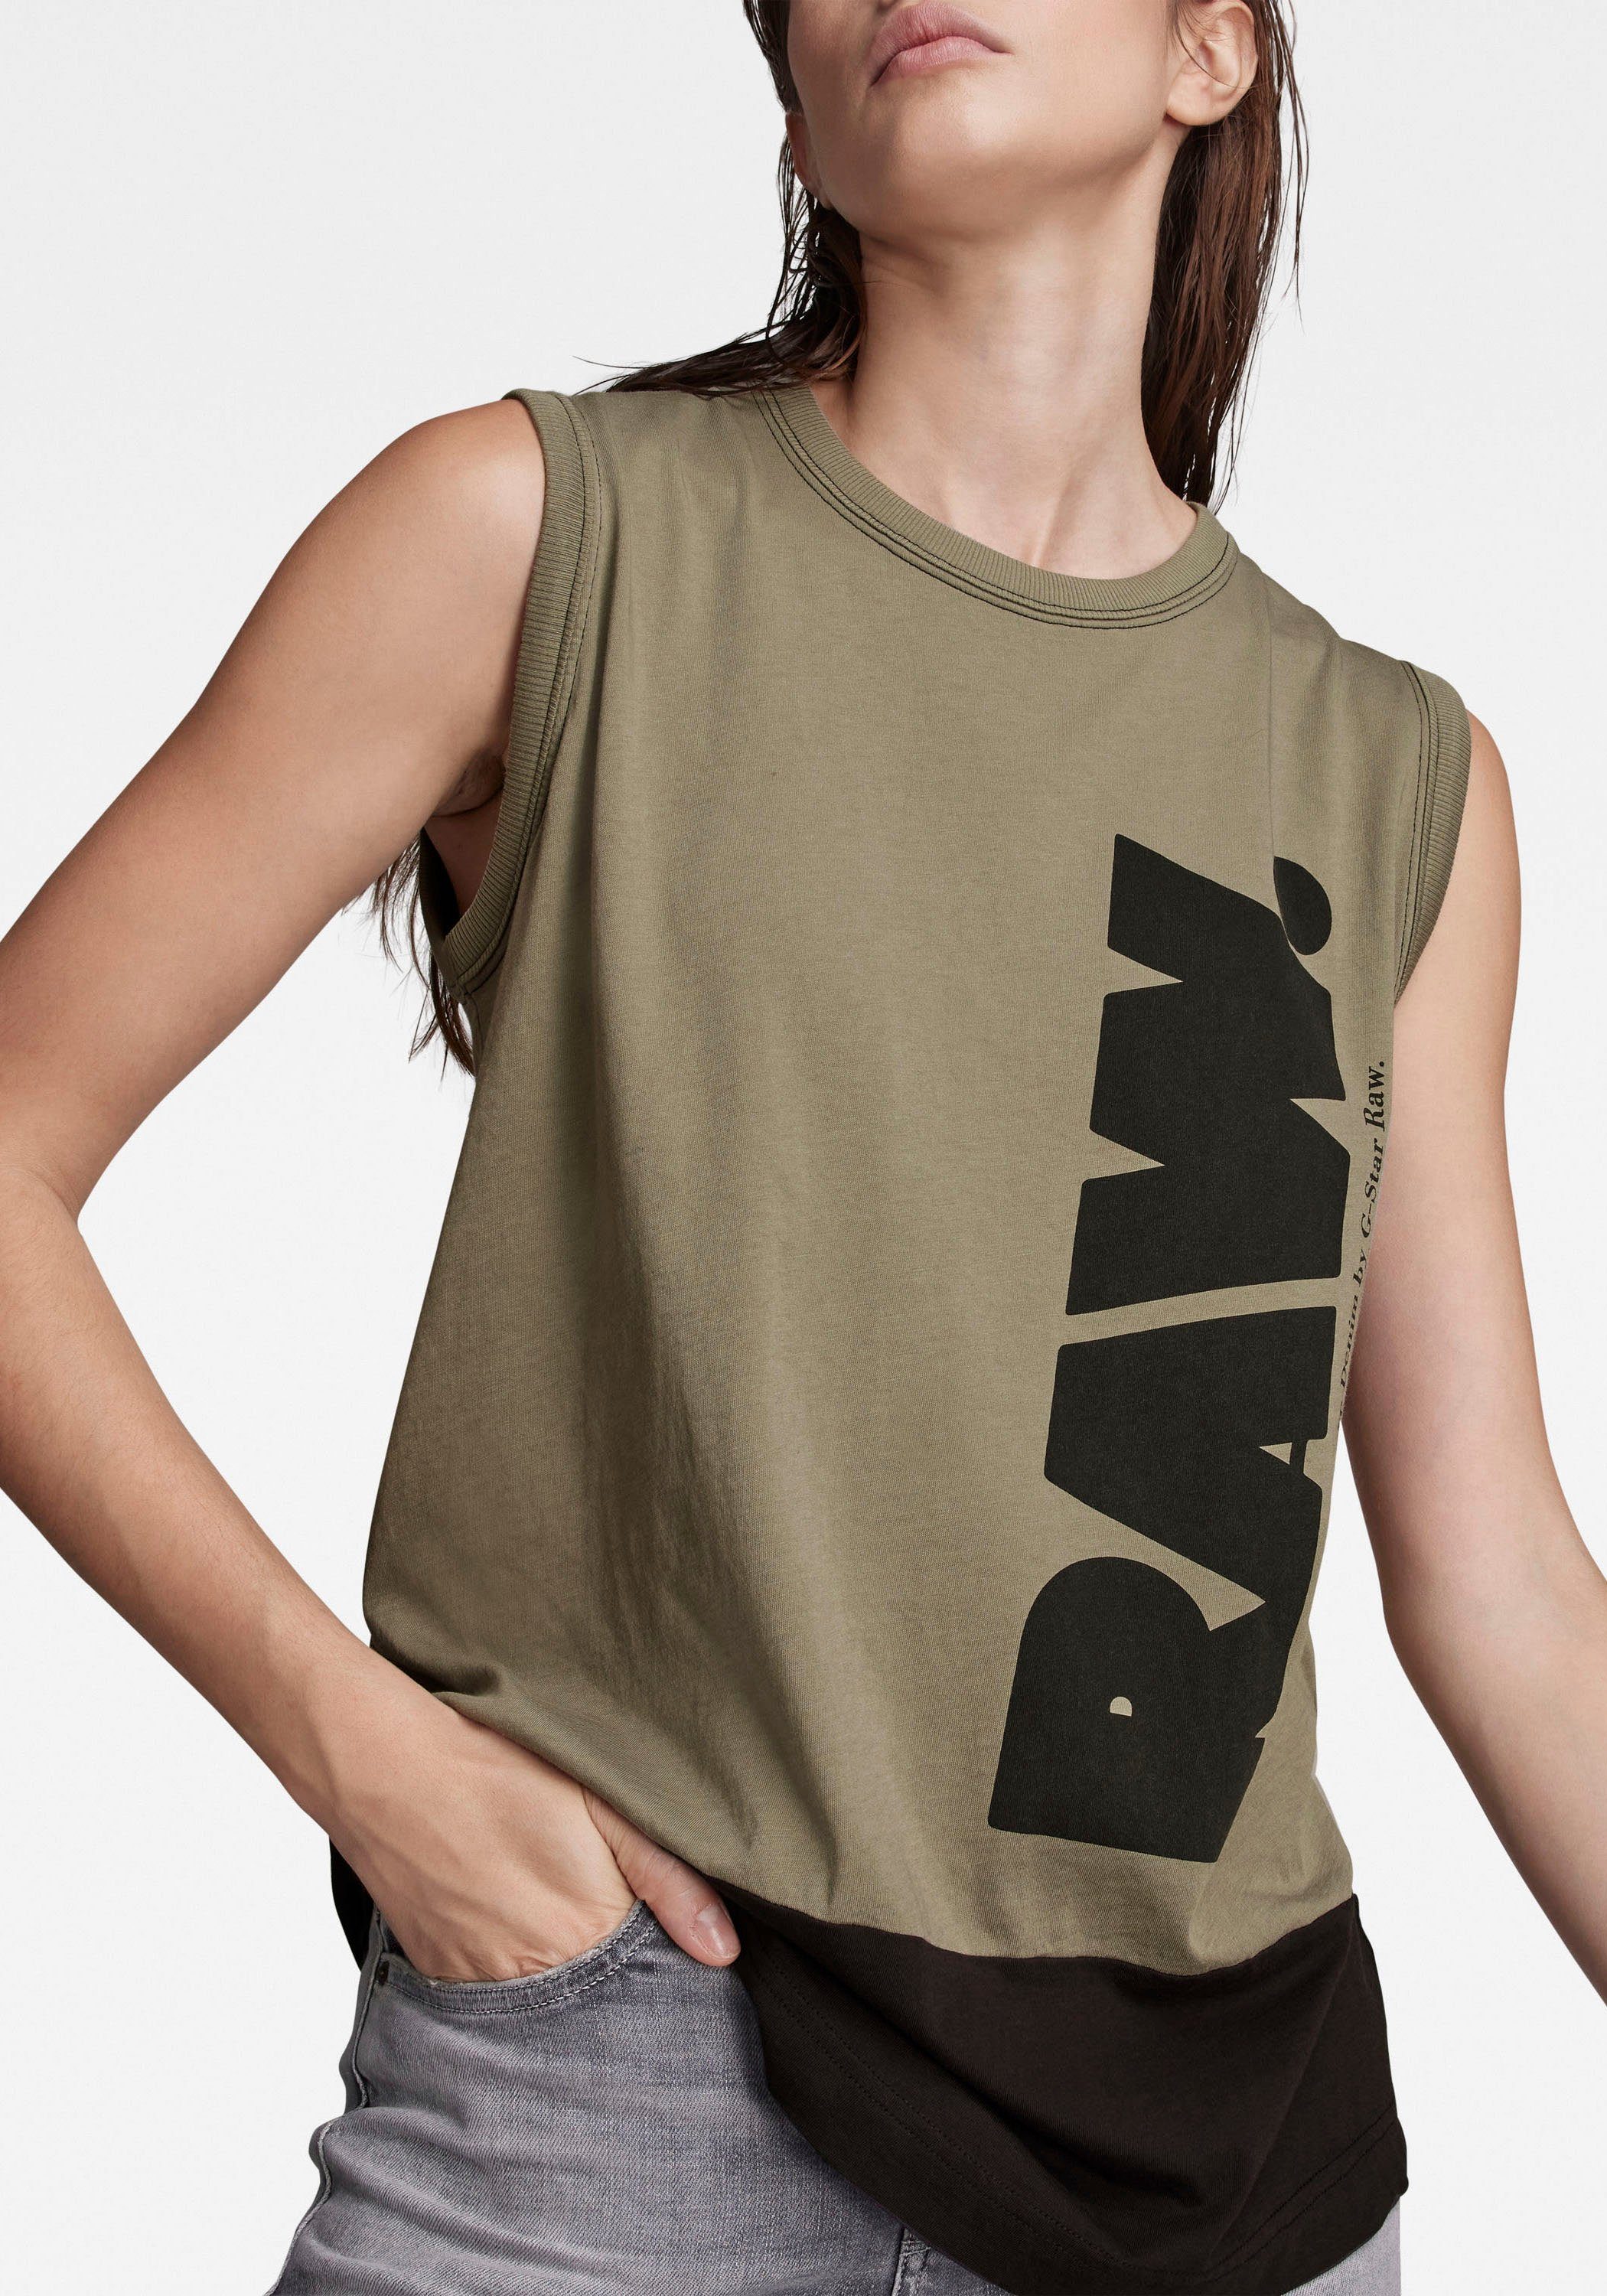 shamrock/dk Lash (oliv/schwarz) vorne T-Shirt tank RAW black Grafikdruck T-Shirt to block Logo color G-Star mti